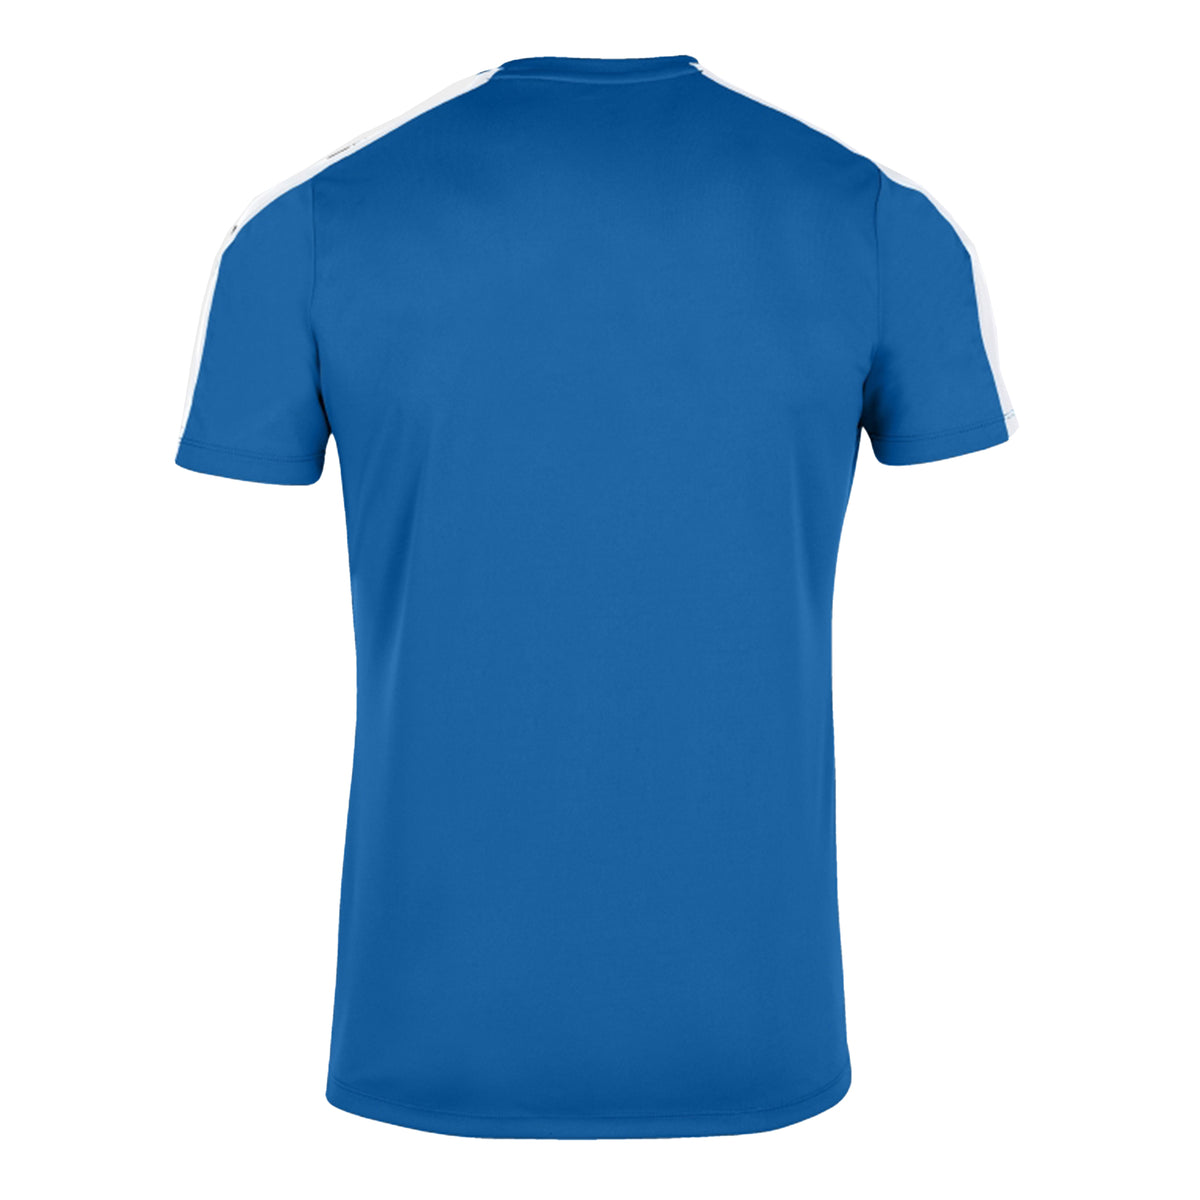 Joma Academy III Junior S/S Football Shirt: Royal Blue/White